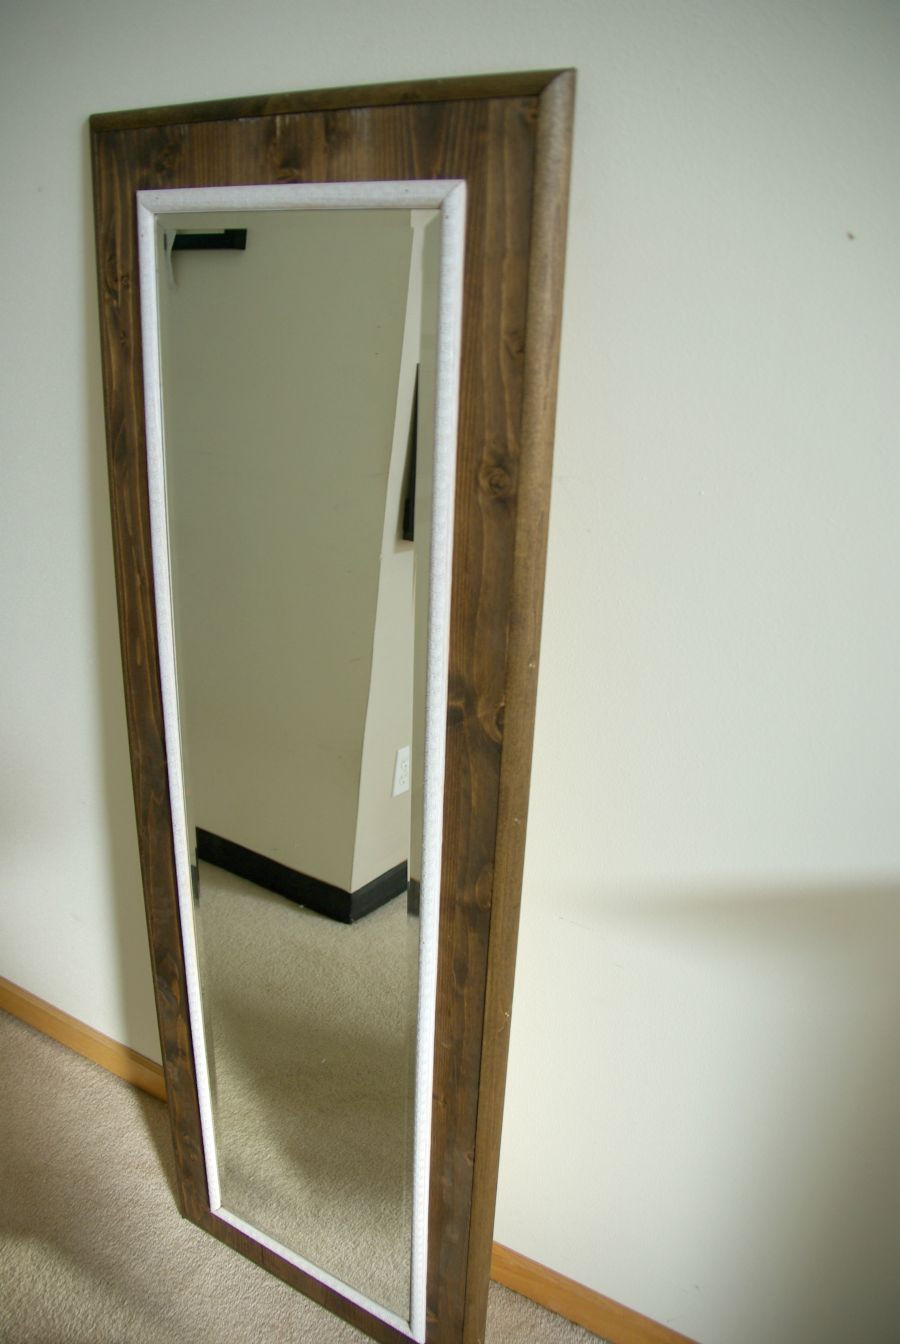 Best ideas about DIY Floor Mirror
. Save or Pin DIY Floor Mirror Frame Now.